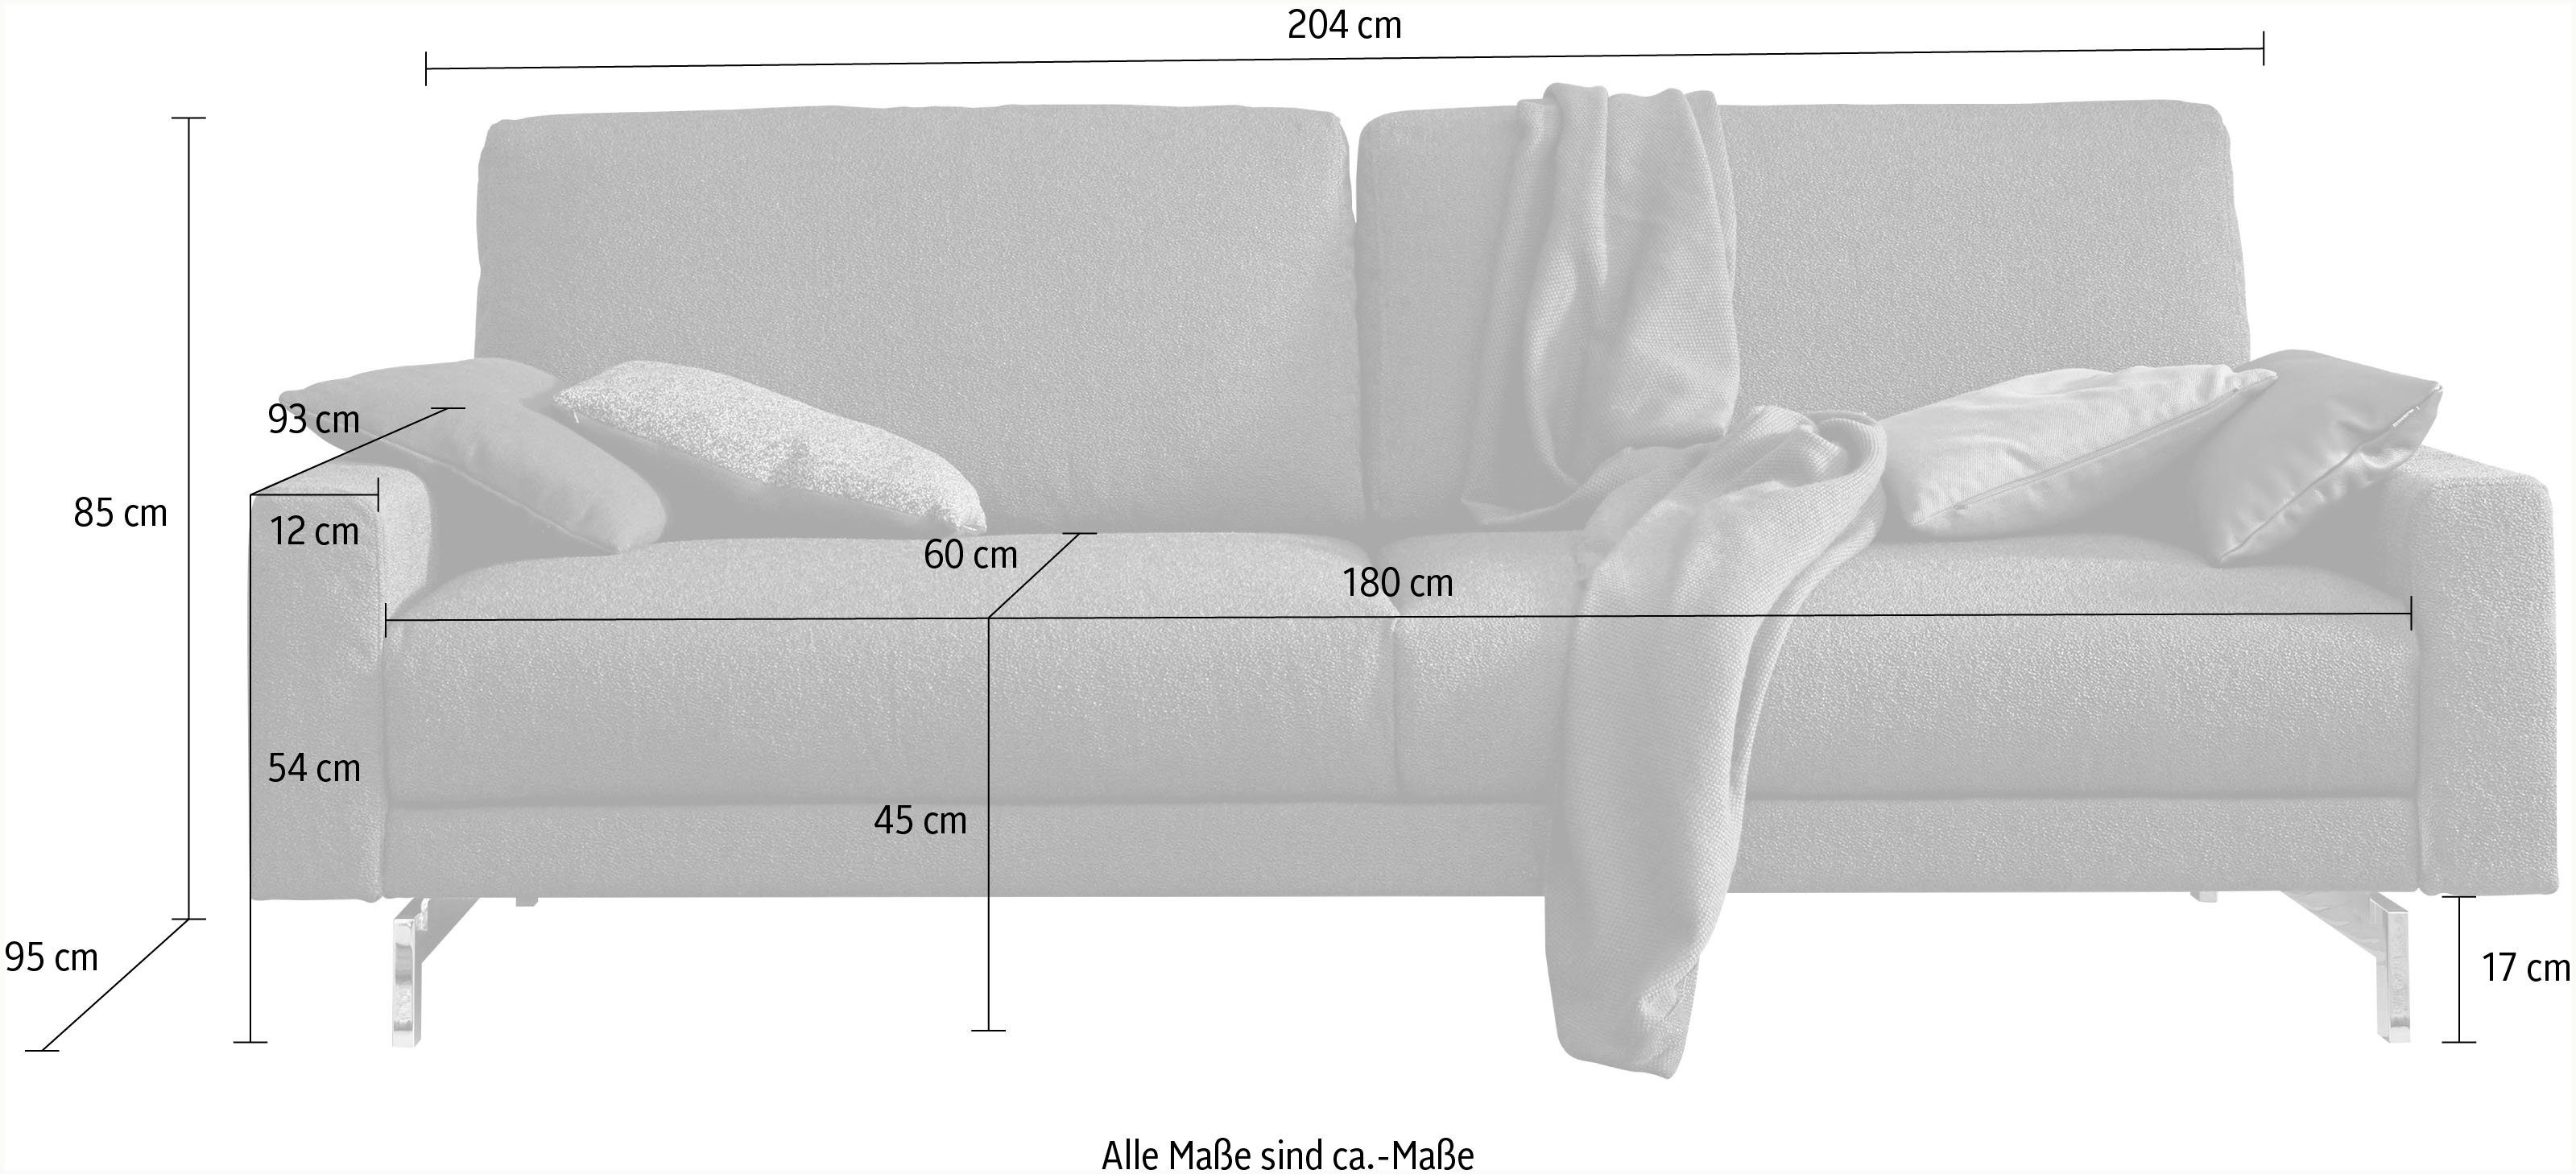 Armlehne cm sofa hs.450, hülsta 3-Sitzer glänzend, Breite 204 niedrig, Fuß chromfarben